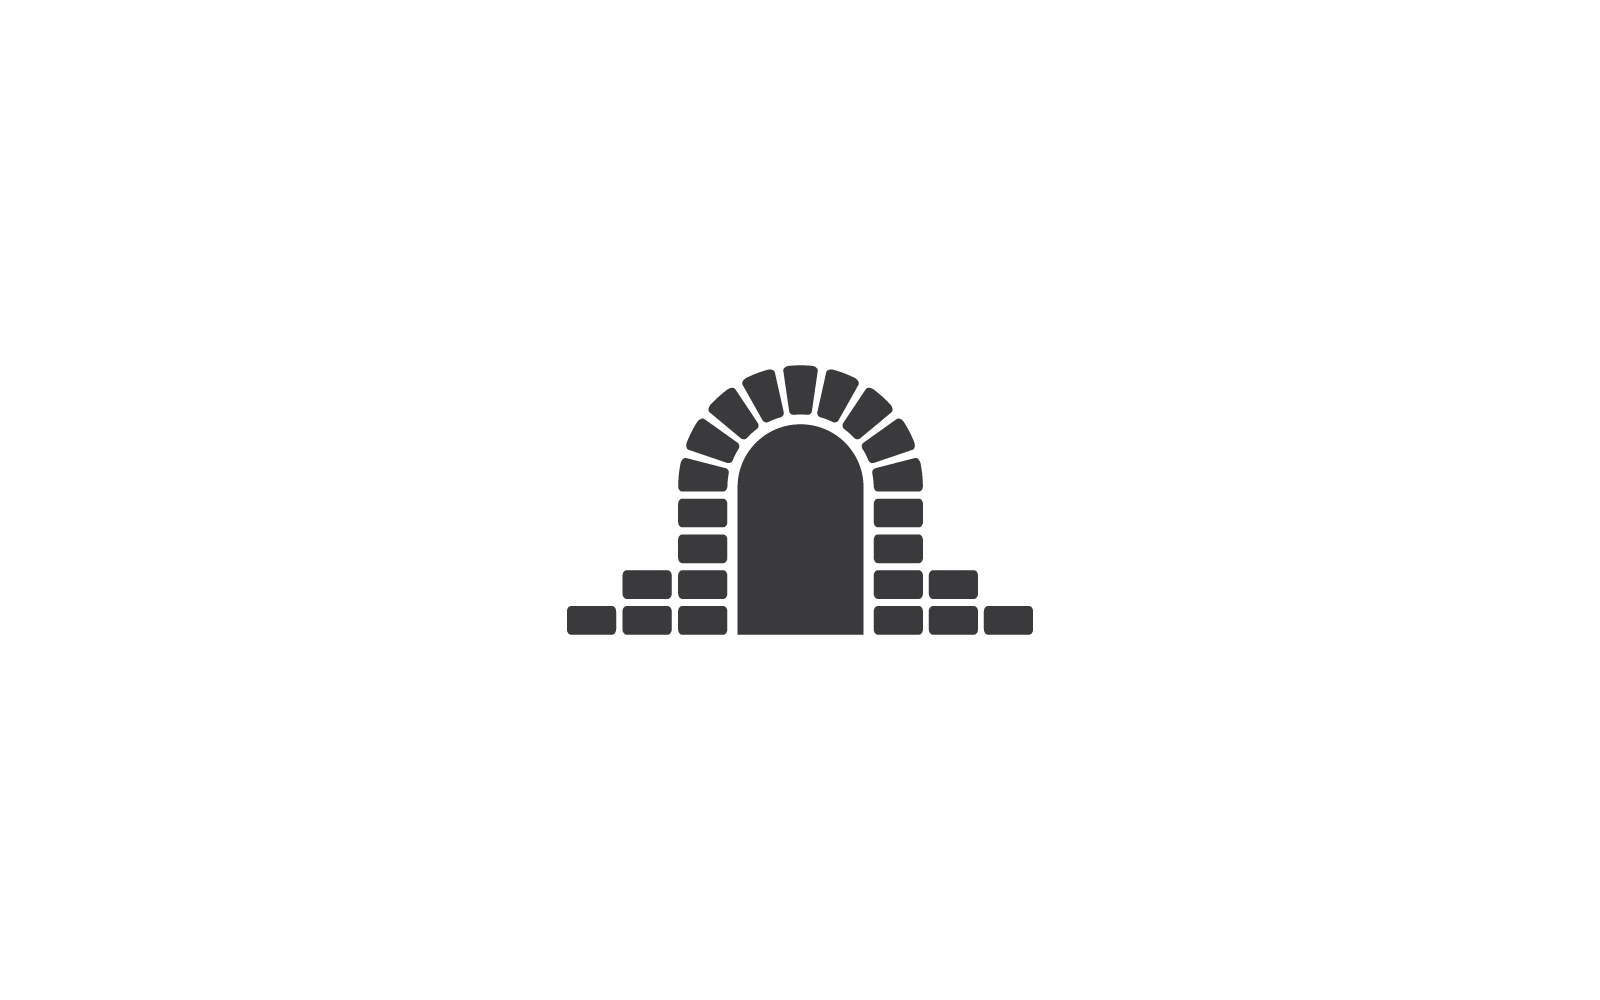 Wall bridge design logo illustration vector icon template Logo Template